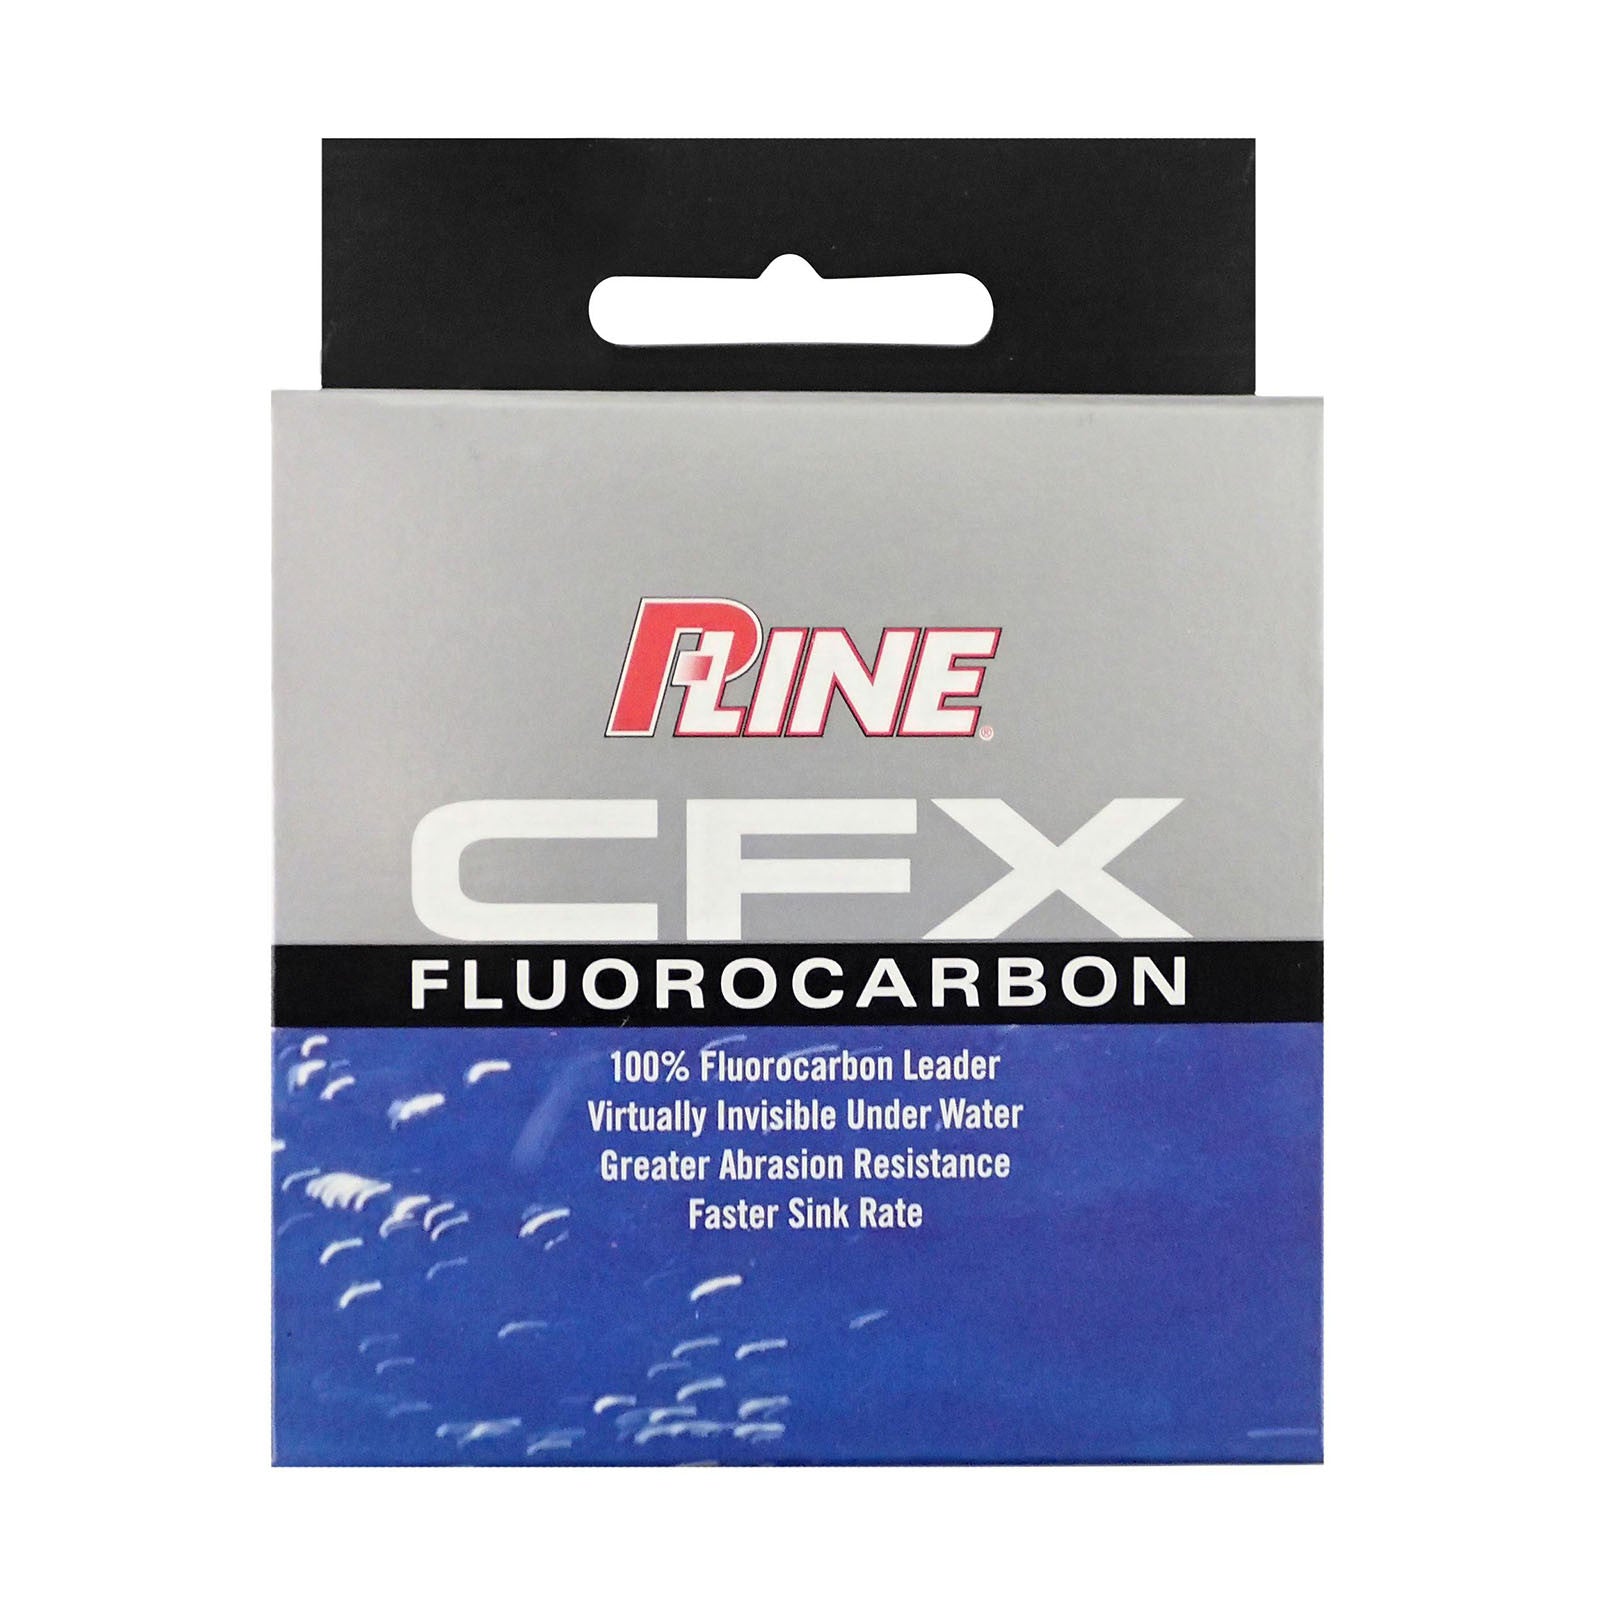 P-Line CFX Fluorocarbon Leader Material Fishing Spool (27-Yard, 2